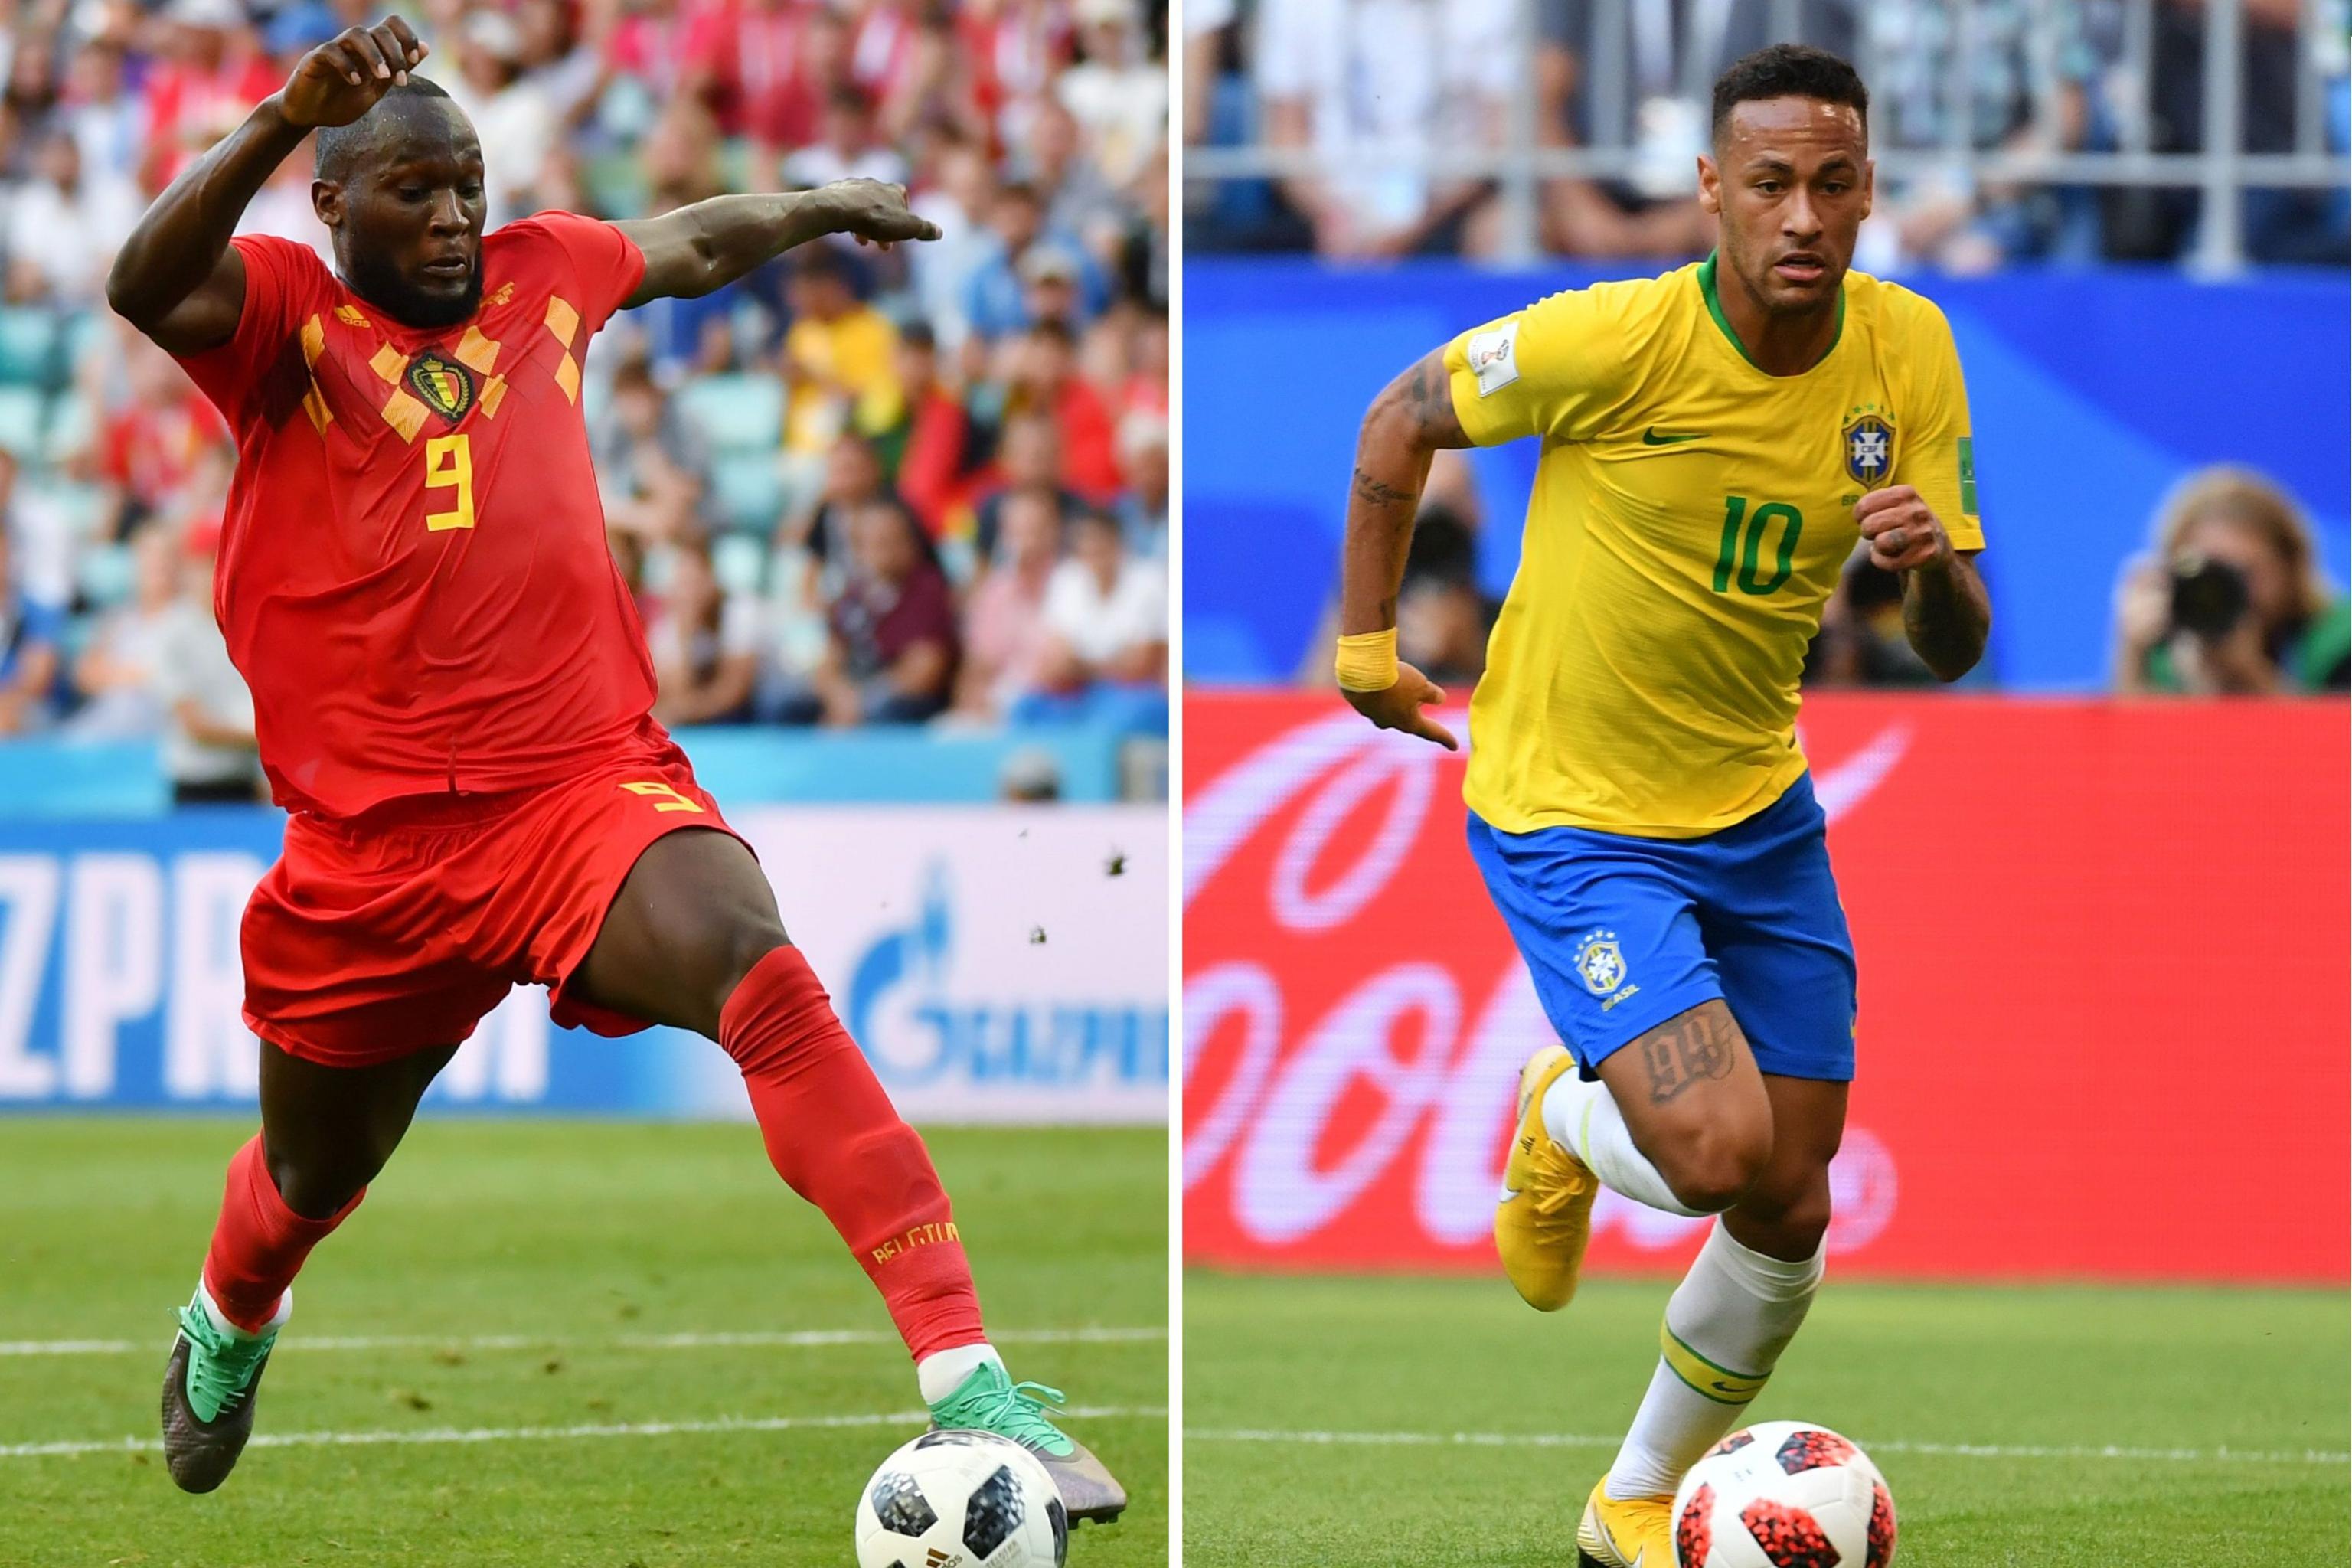 Brazil vs. Belgium Team News, Live Stream, TV Info for World Cup 2018